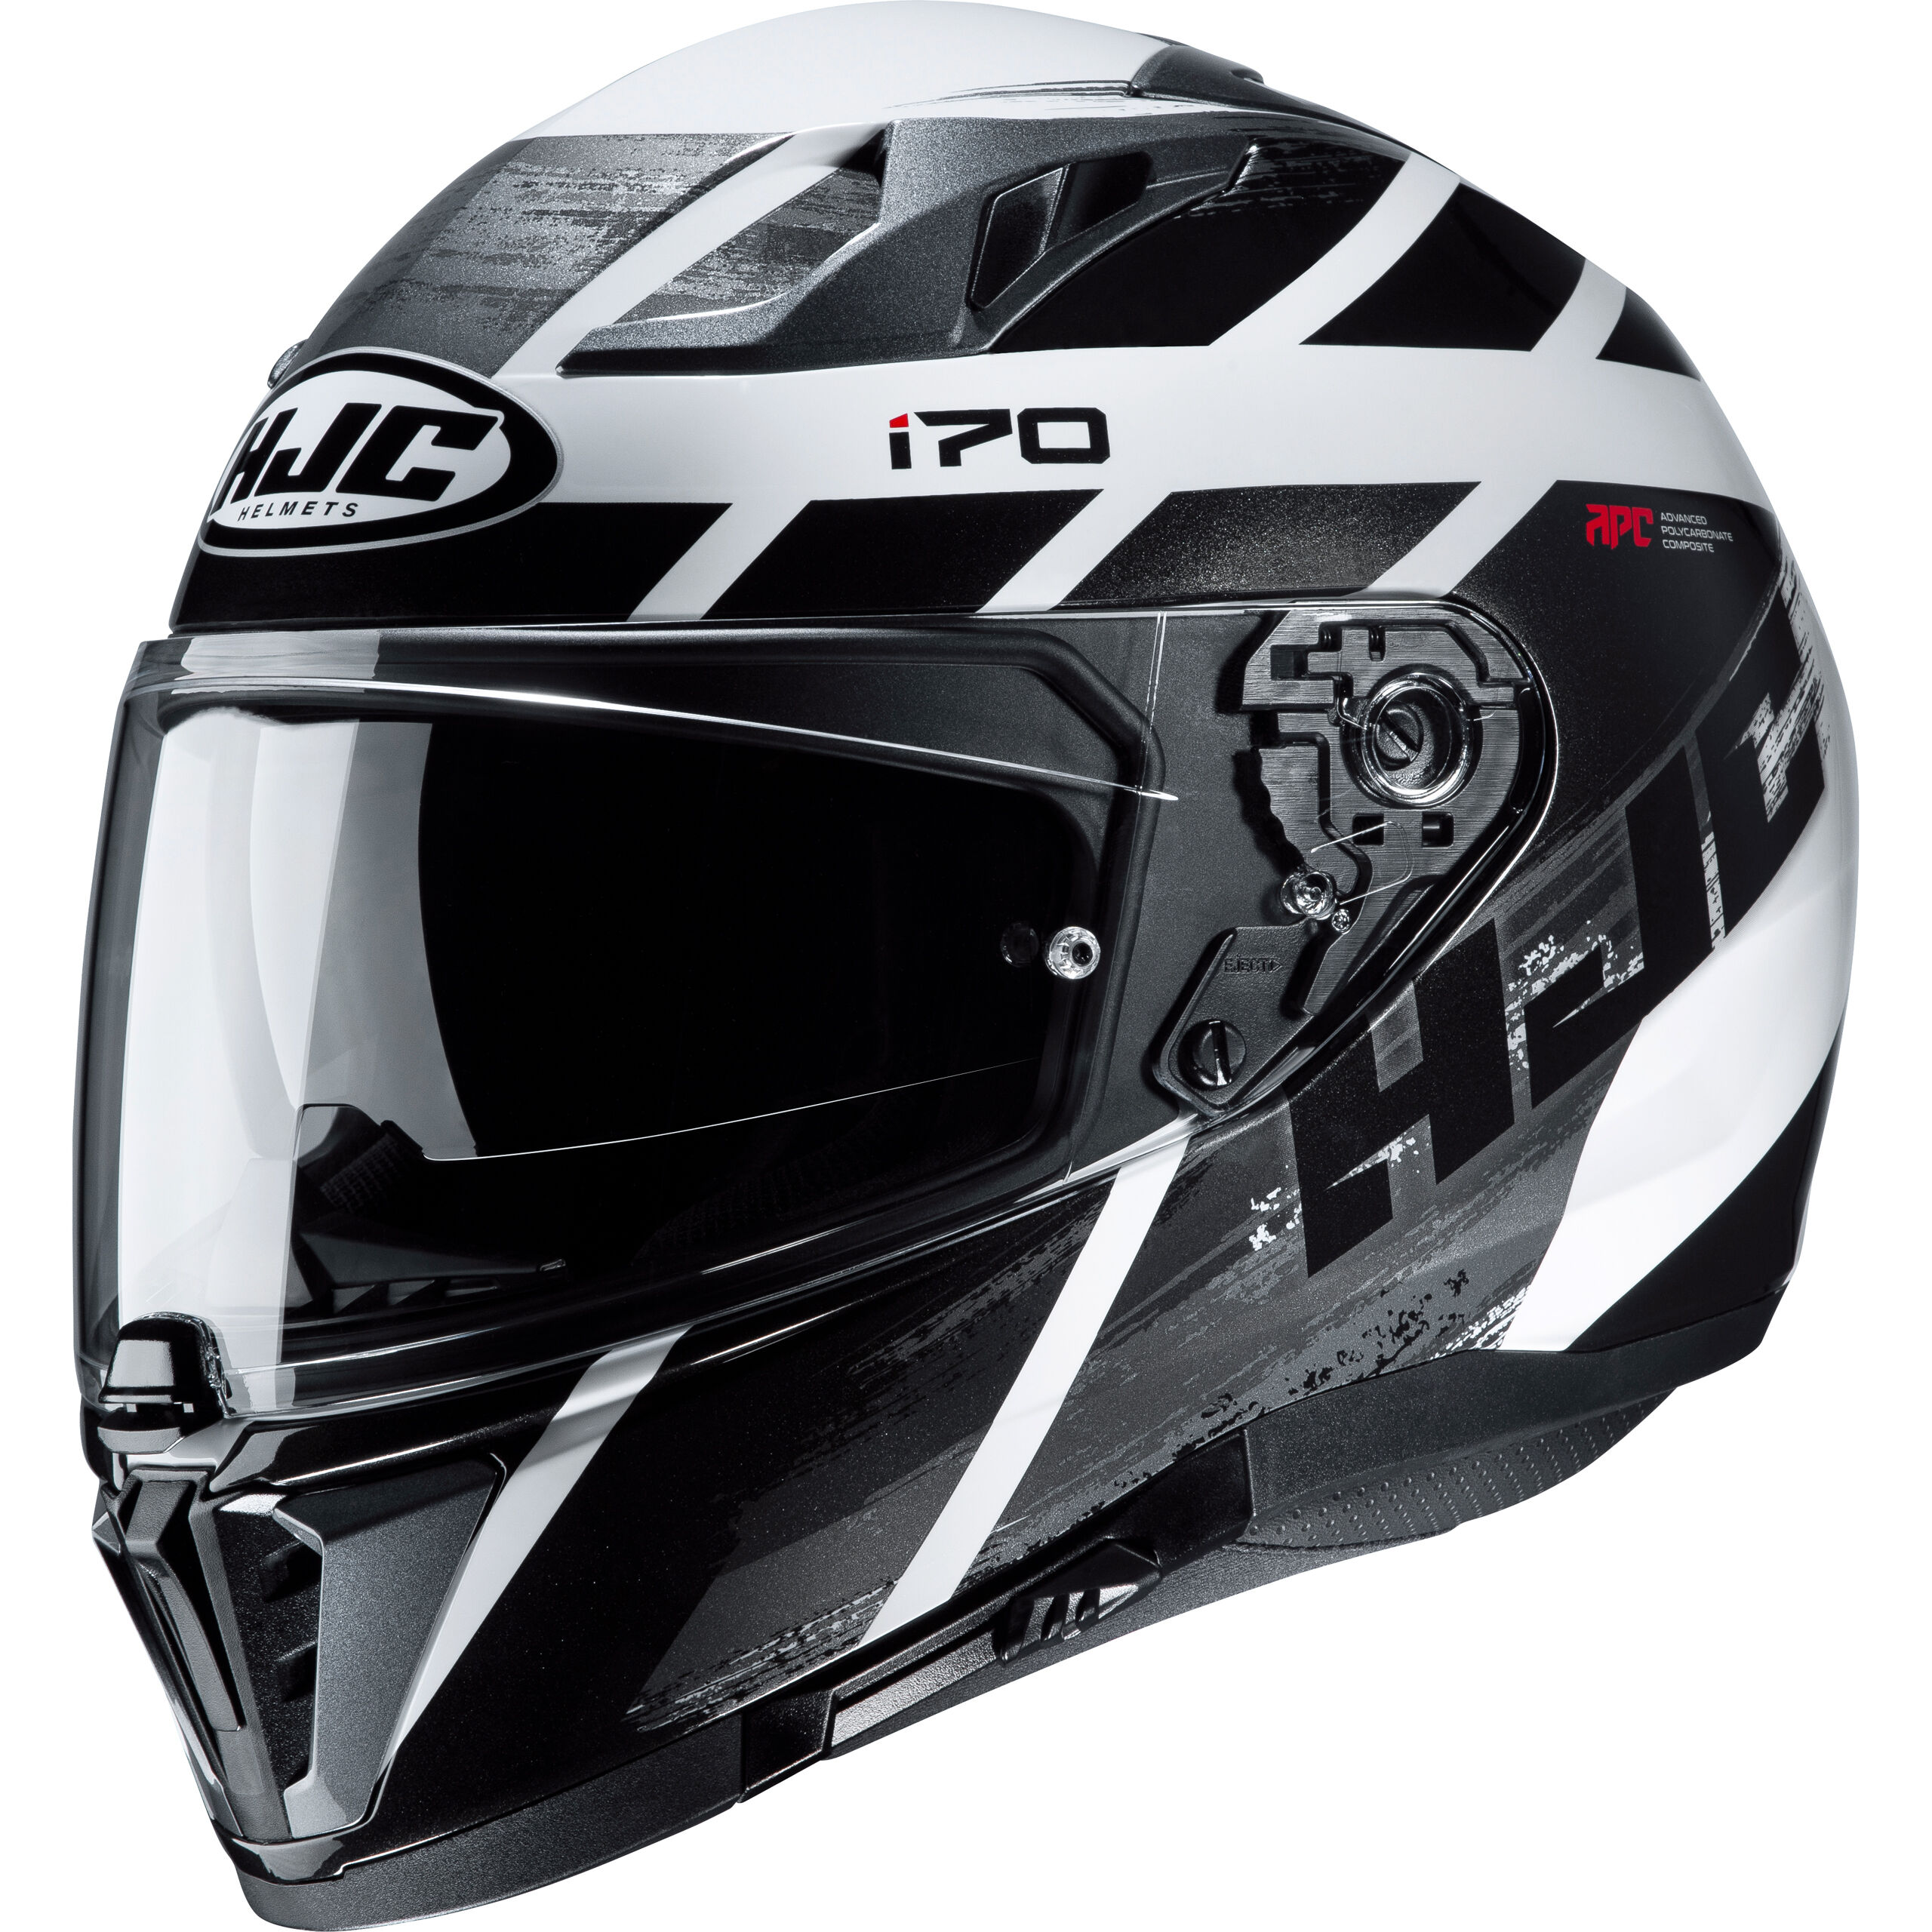 HJC I70 Eluma Motorcycle Motorbike Scooter Full Face Crash Helmet Pinlock Ready 